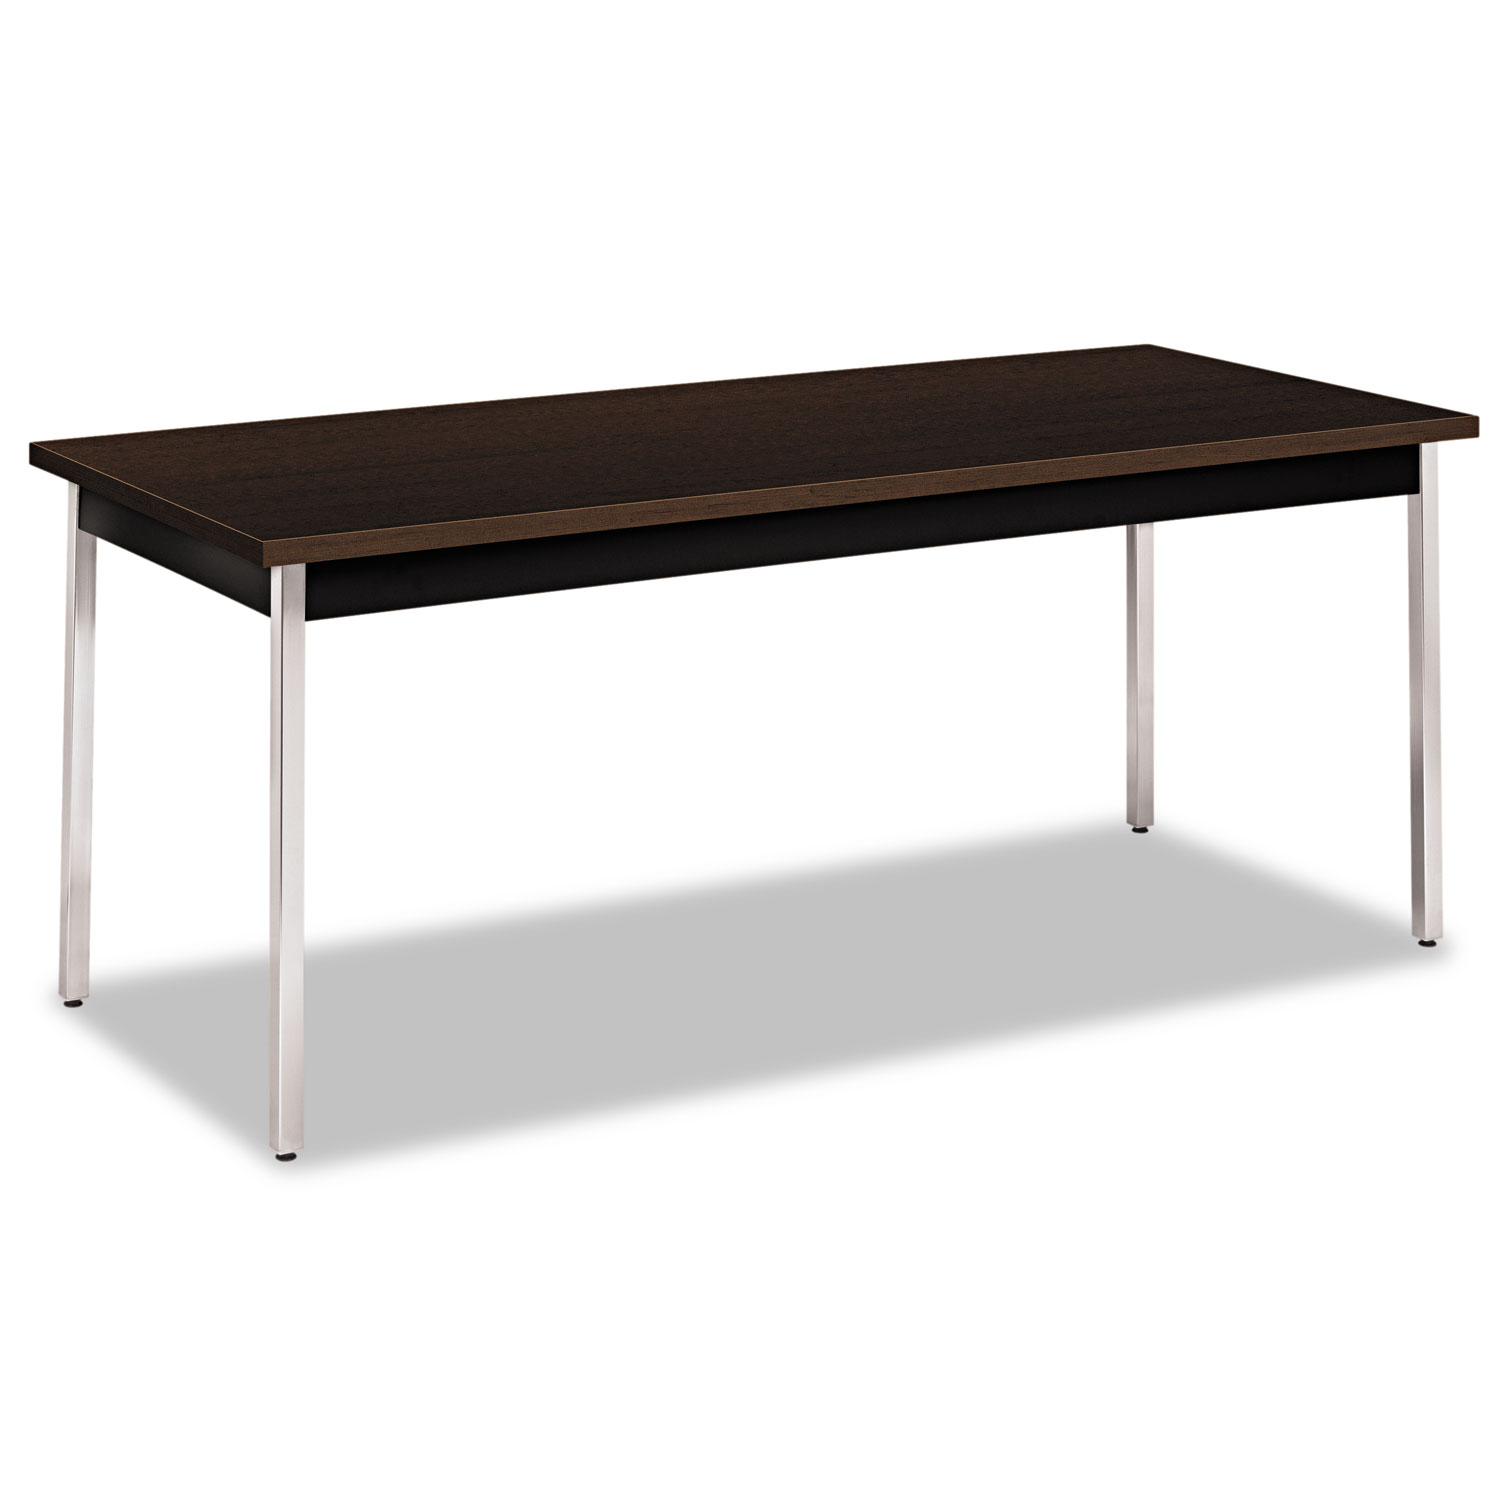 Utility Table, Rectangular, 72w x 30d x 29h, Mocha/Black